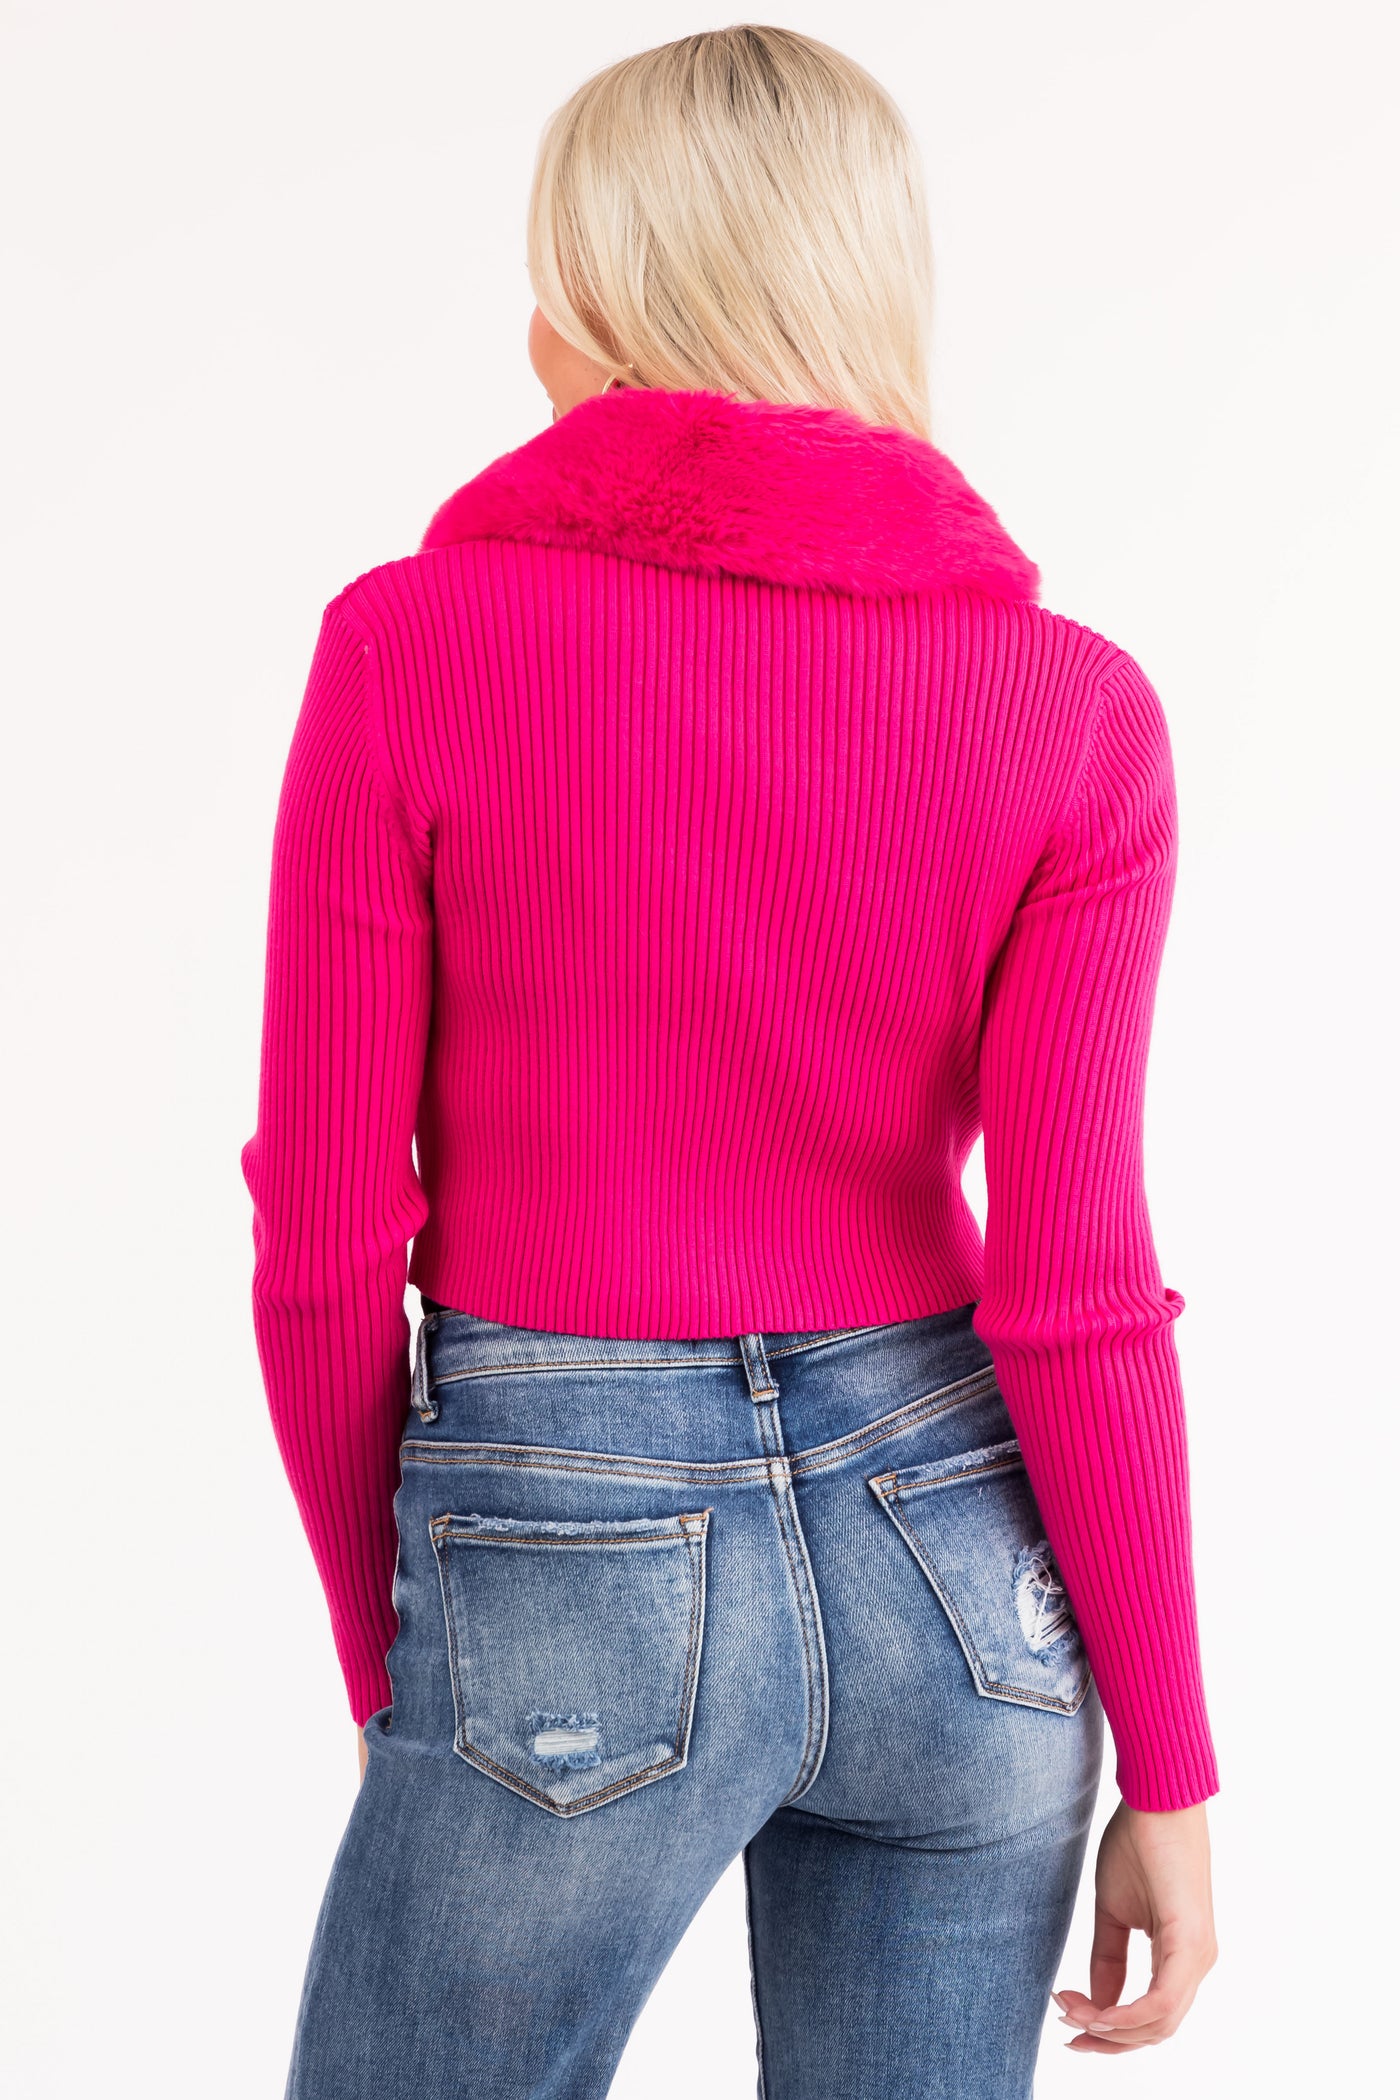 Hot Pink Faux Fur Collar Knit Sweater Cardigan